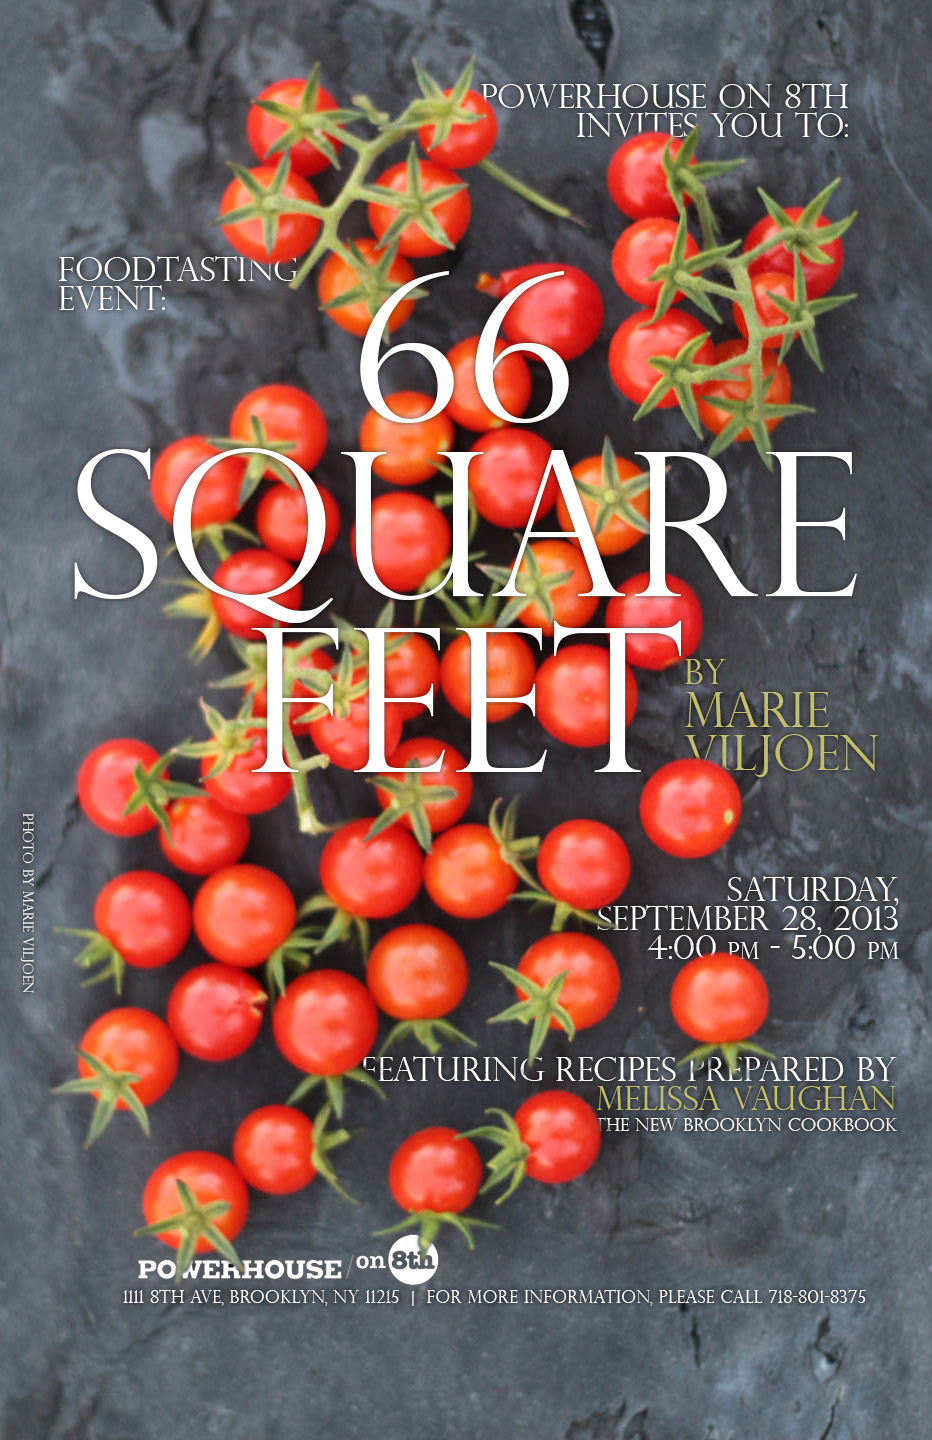 pH on 8th's Food-Tasting Series with Melissa Vaughan: 66 Square Feet by Marie Viljoen 